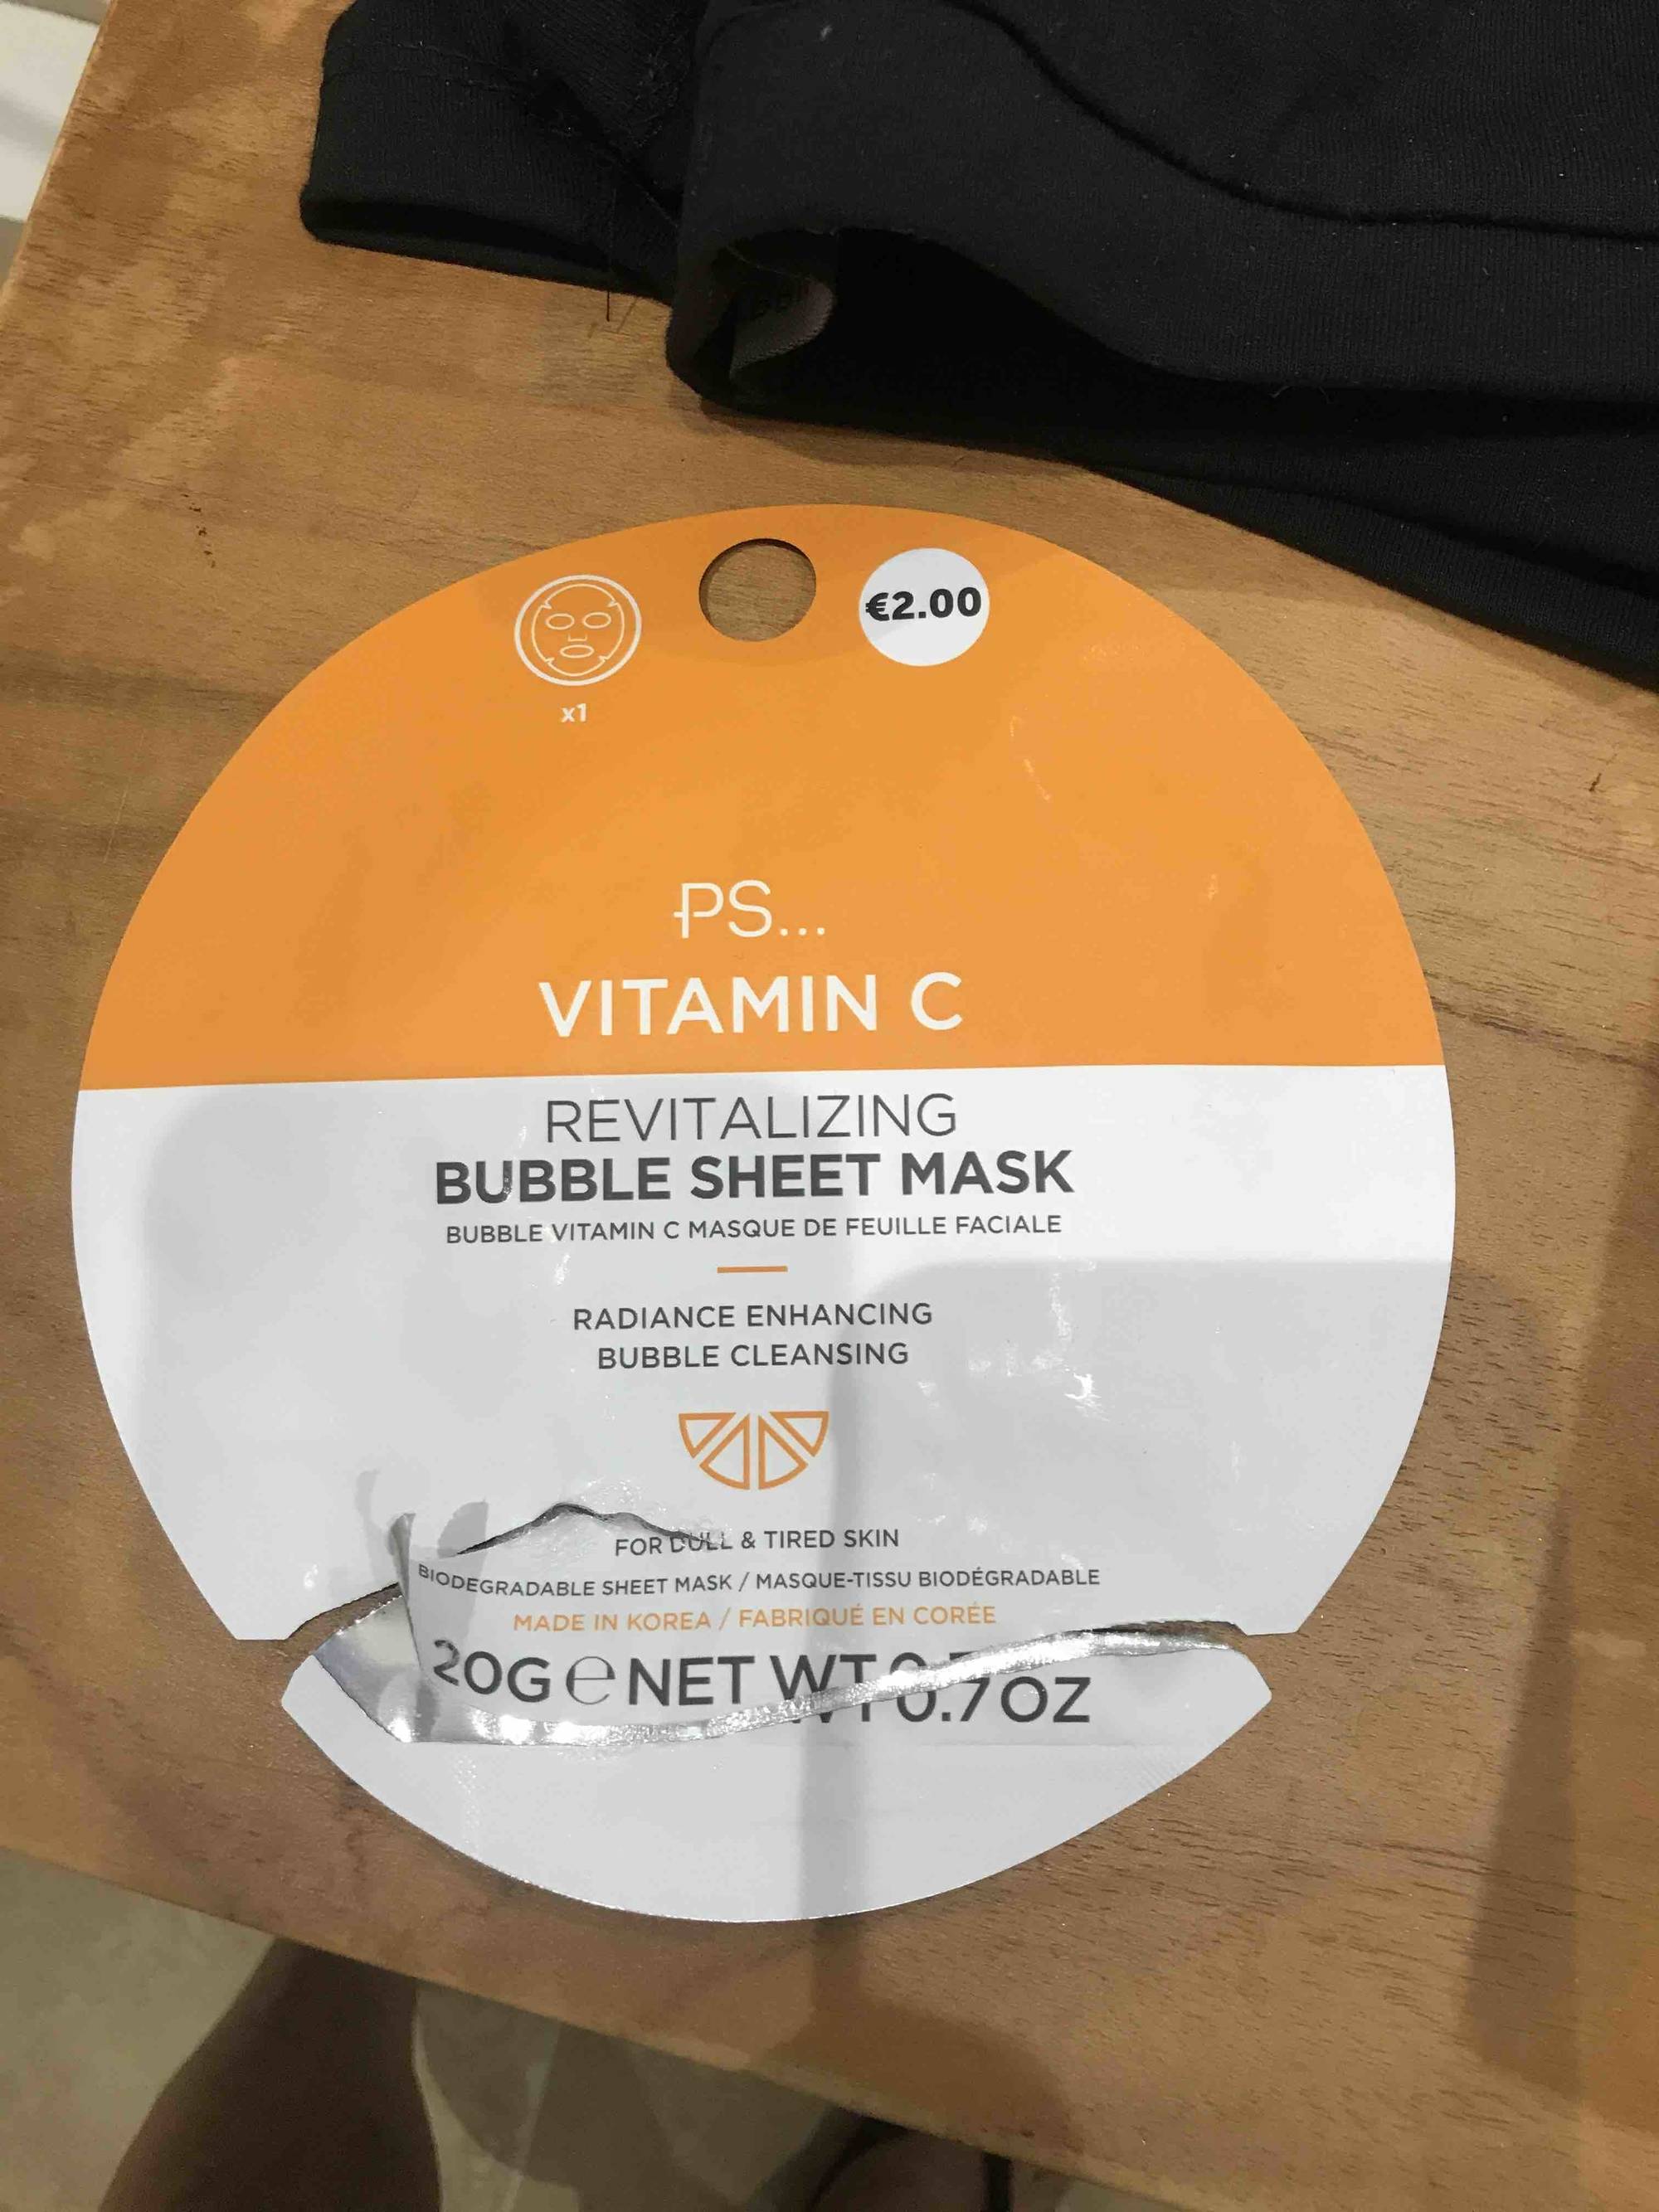 PRIMARK - Bubble Vitamin C Masque de feuille faciale